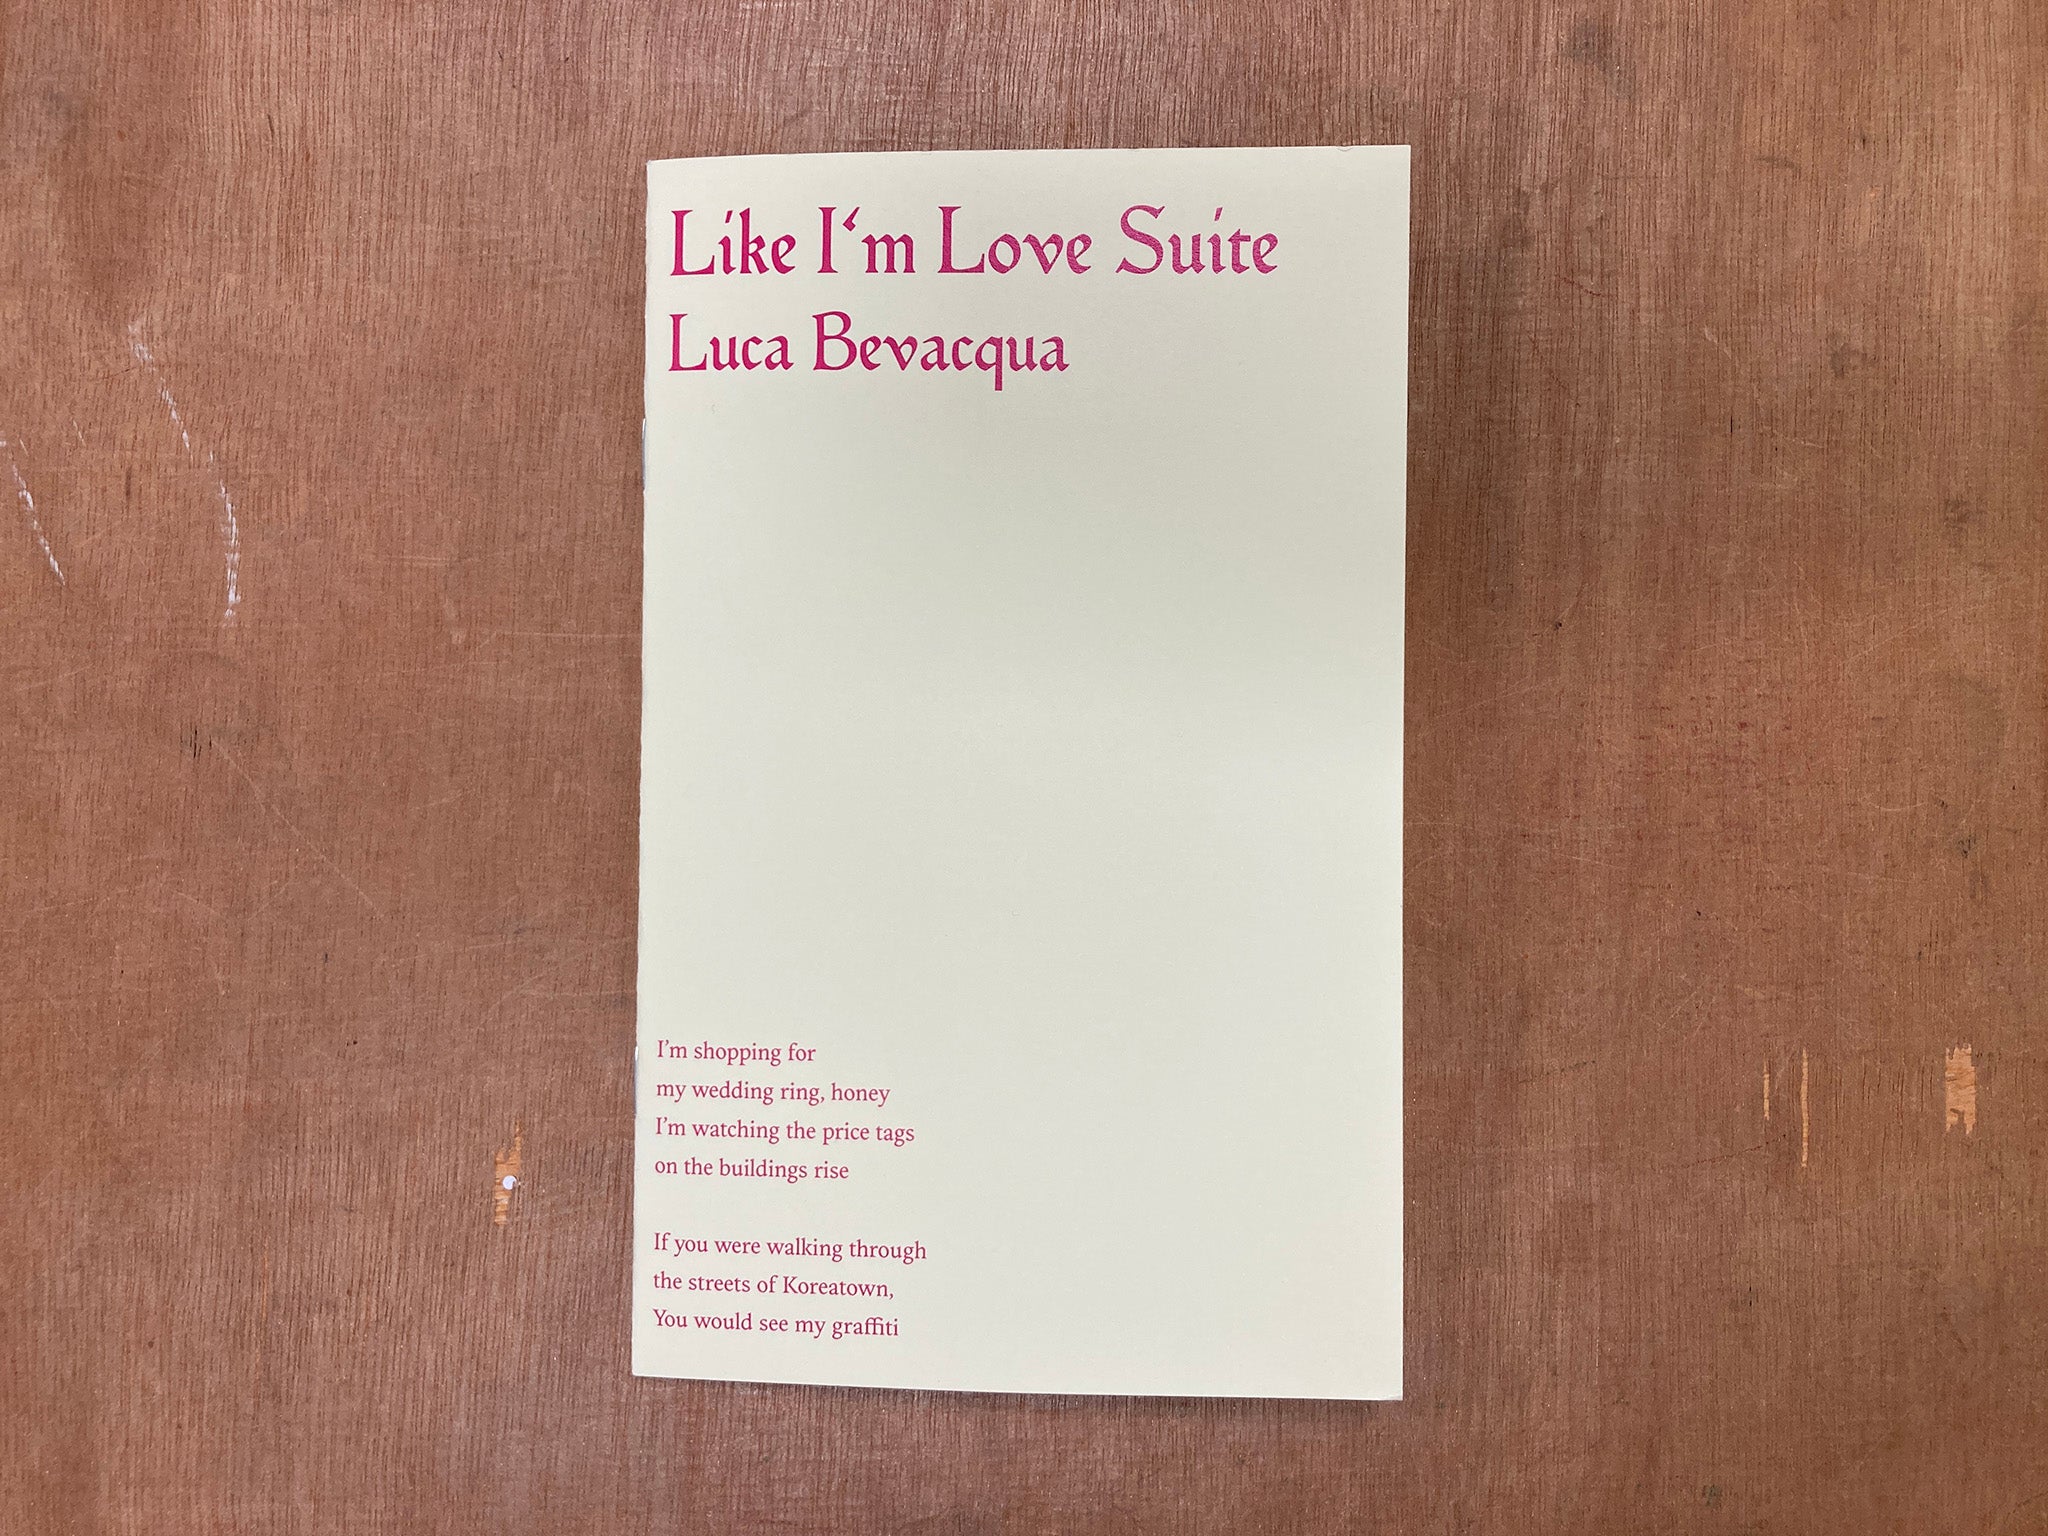 LIKE I'M LOVE SUITE by Luca Bevacqua